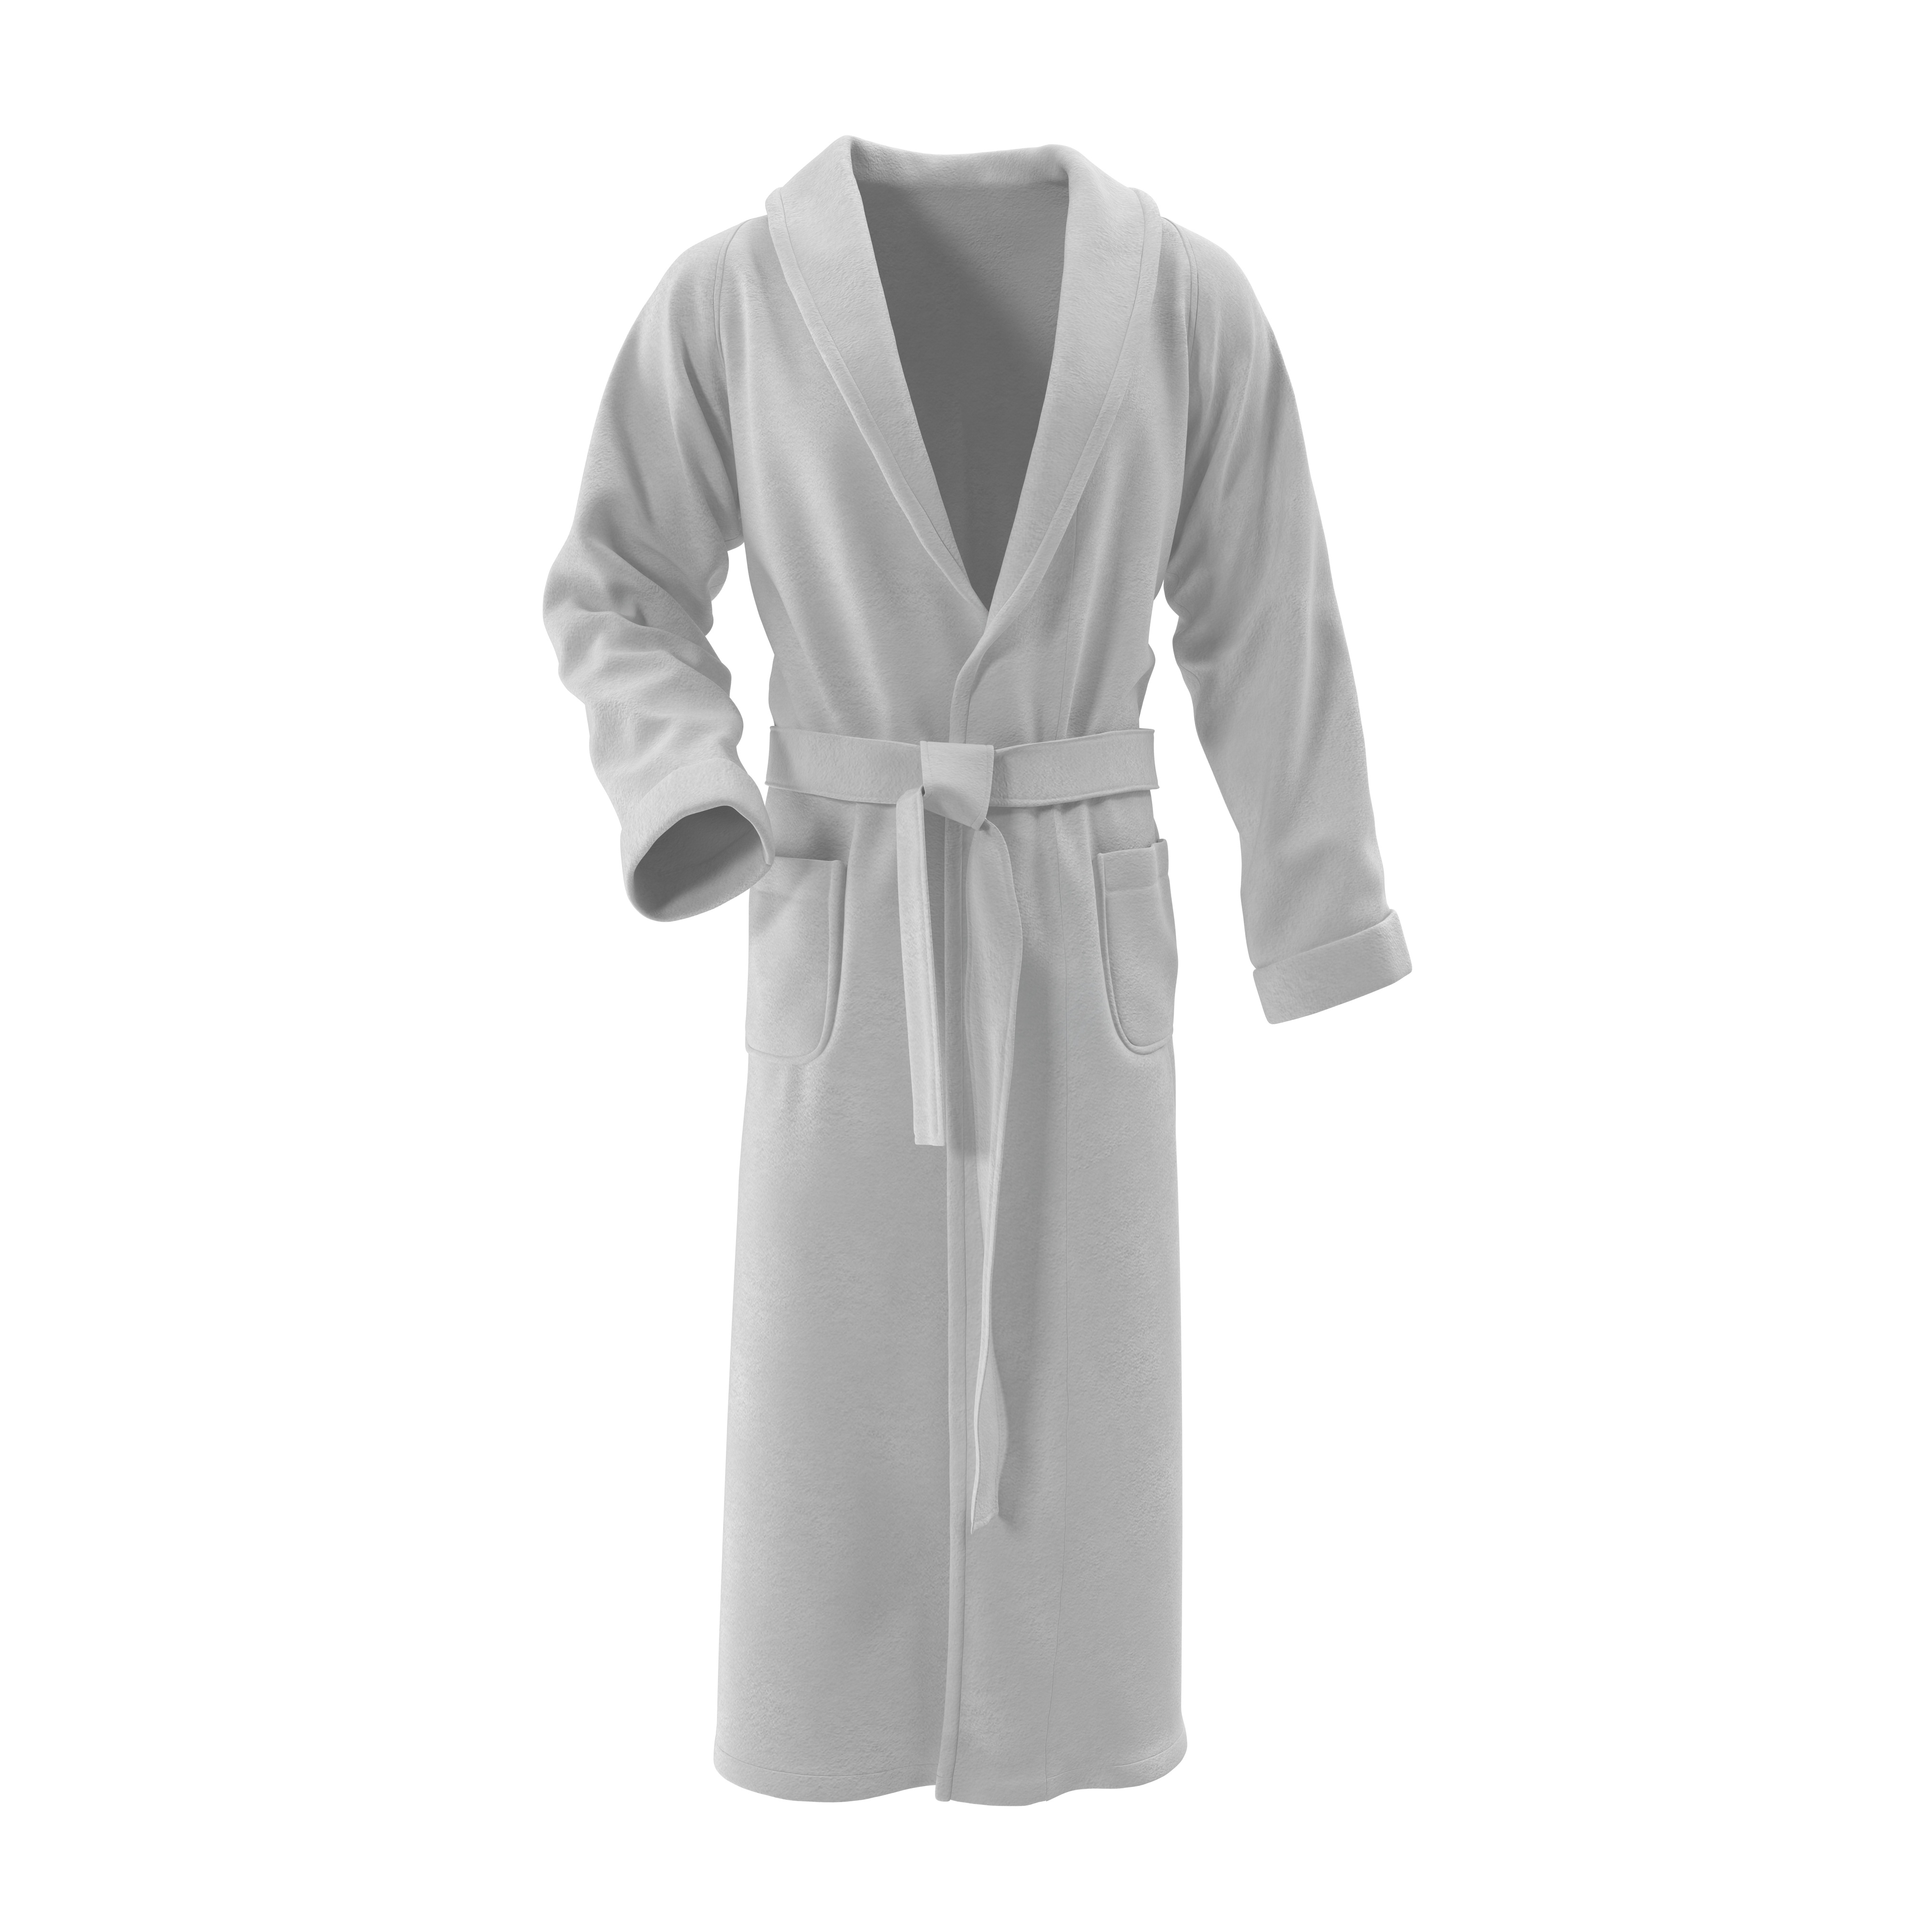 white bathrobe. isolated on white. 3D Illustration